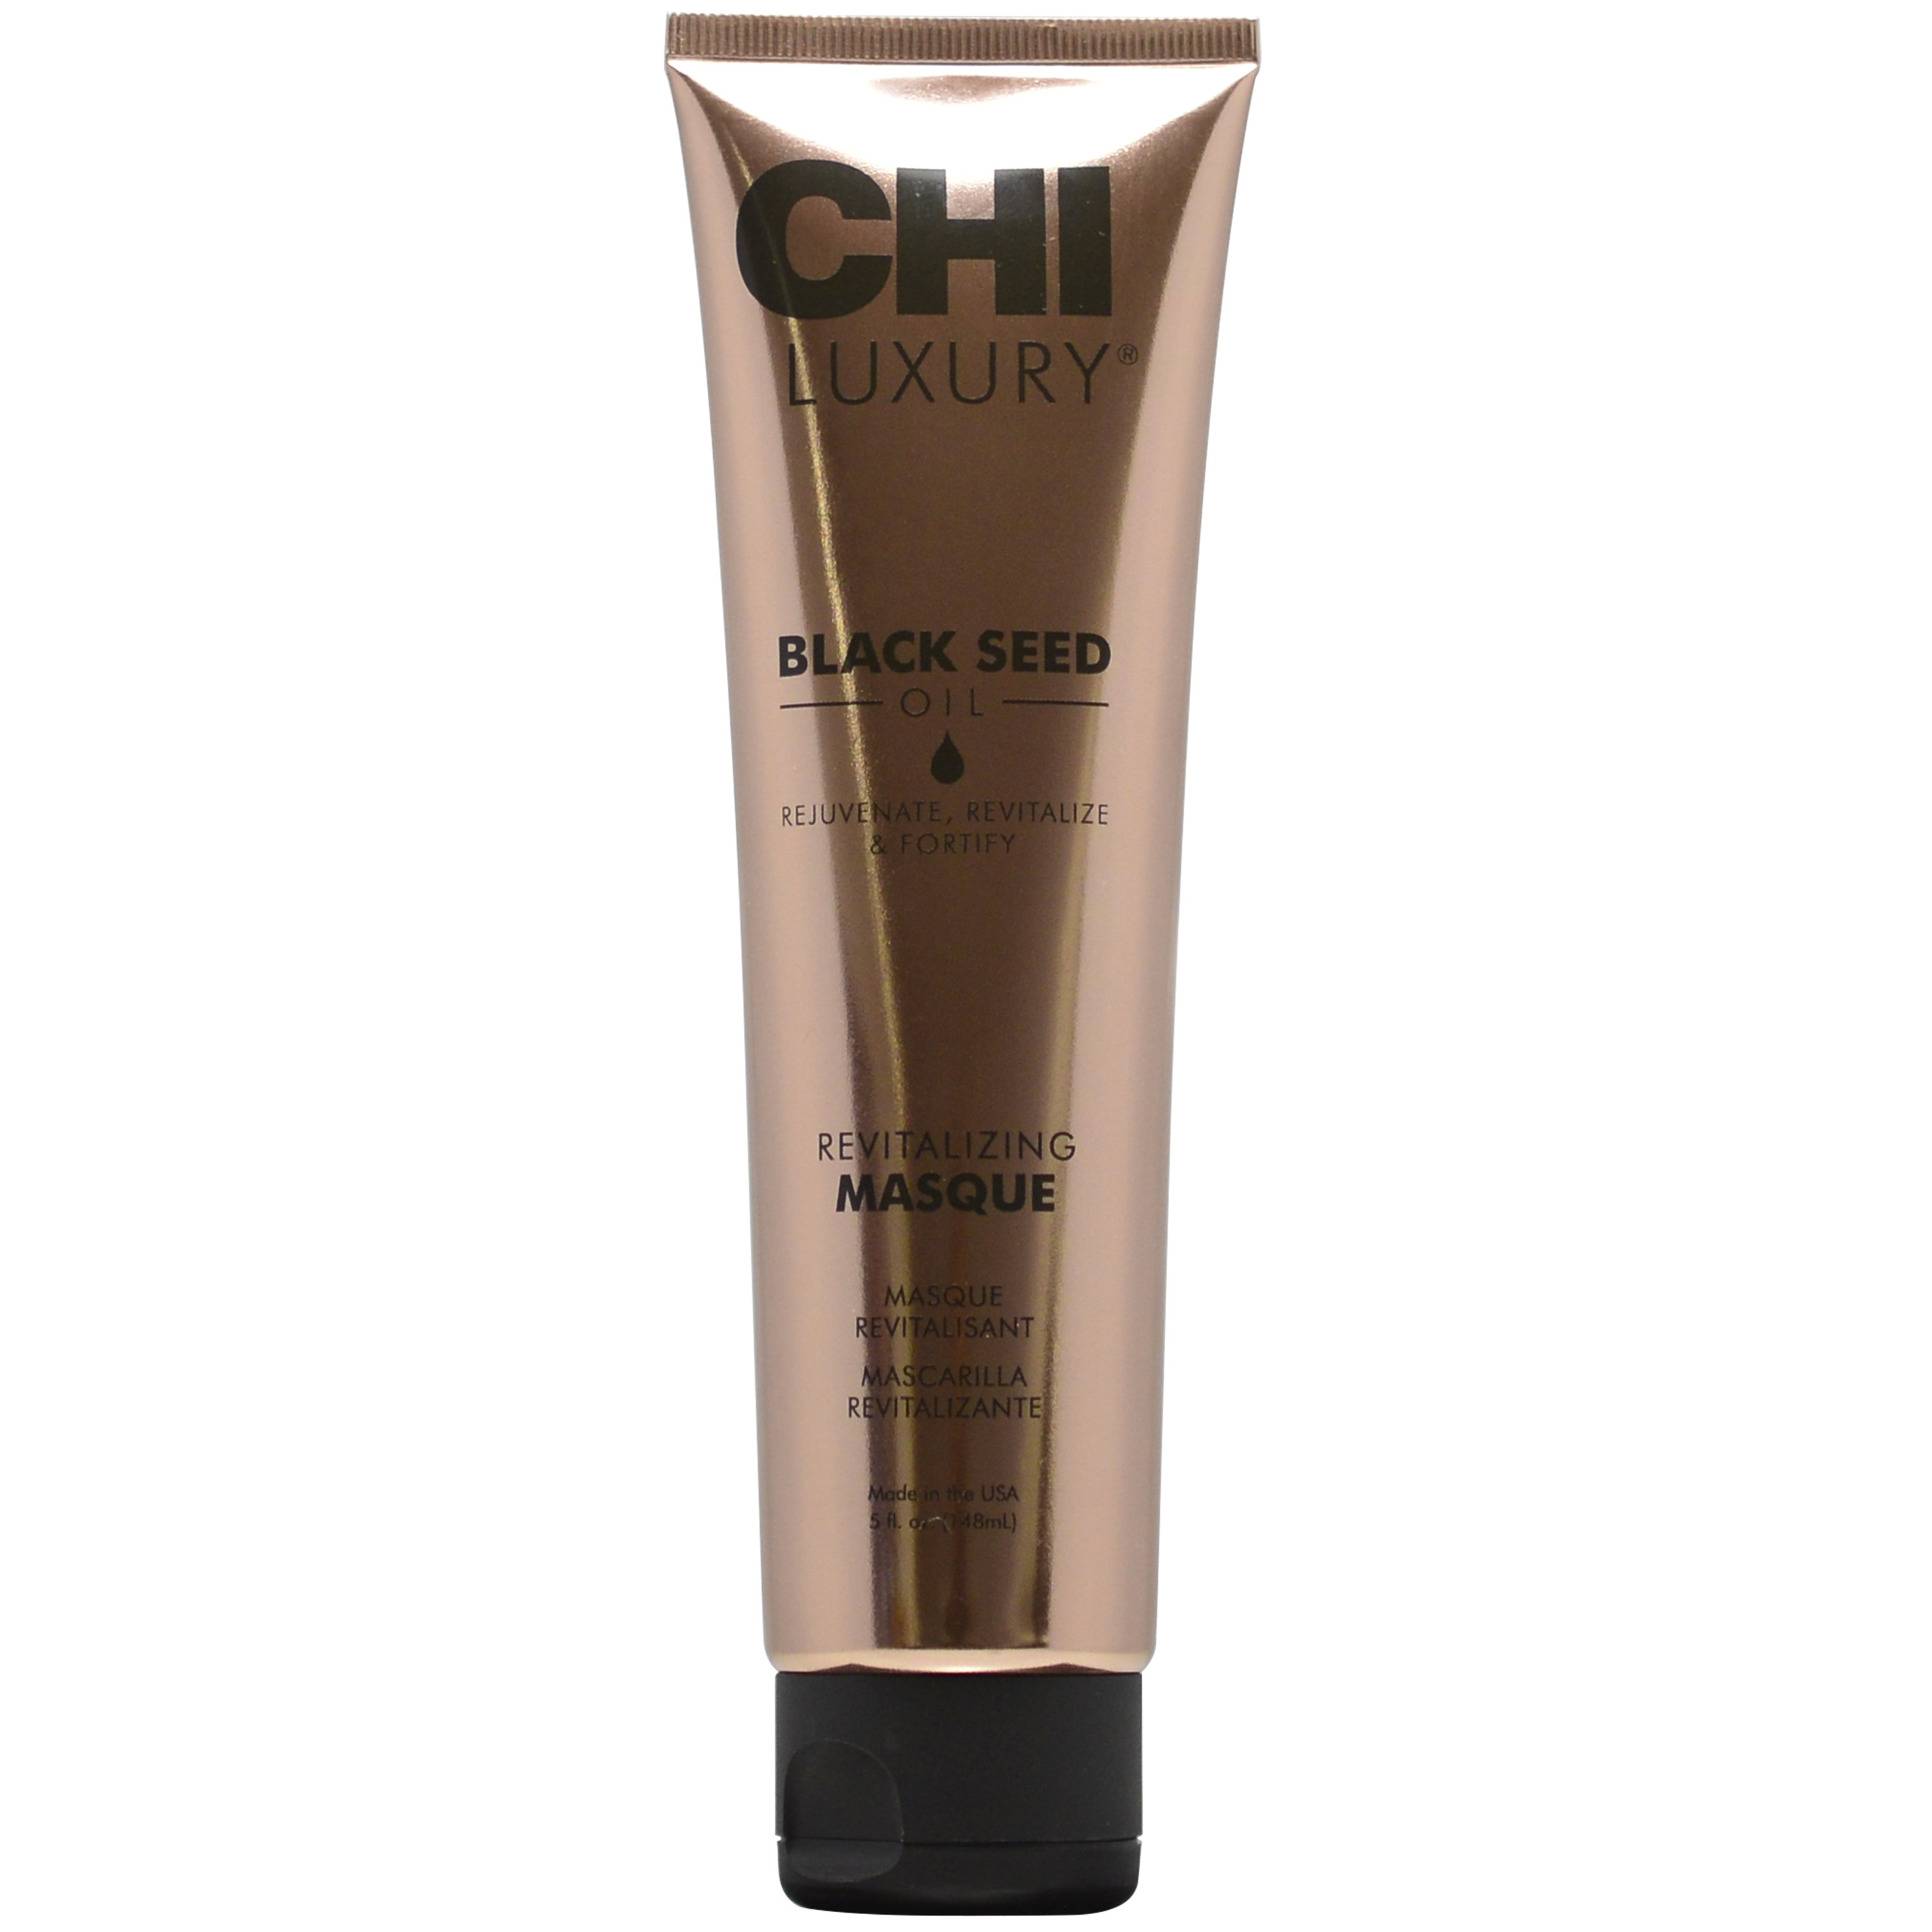 Chi Luxury Black Seed Oil Revitalizing Hair Masque, 5 Fl Oz - image 1 of 2